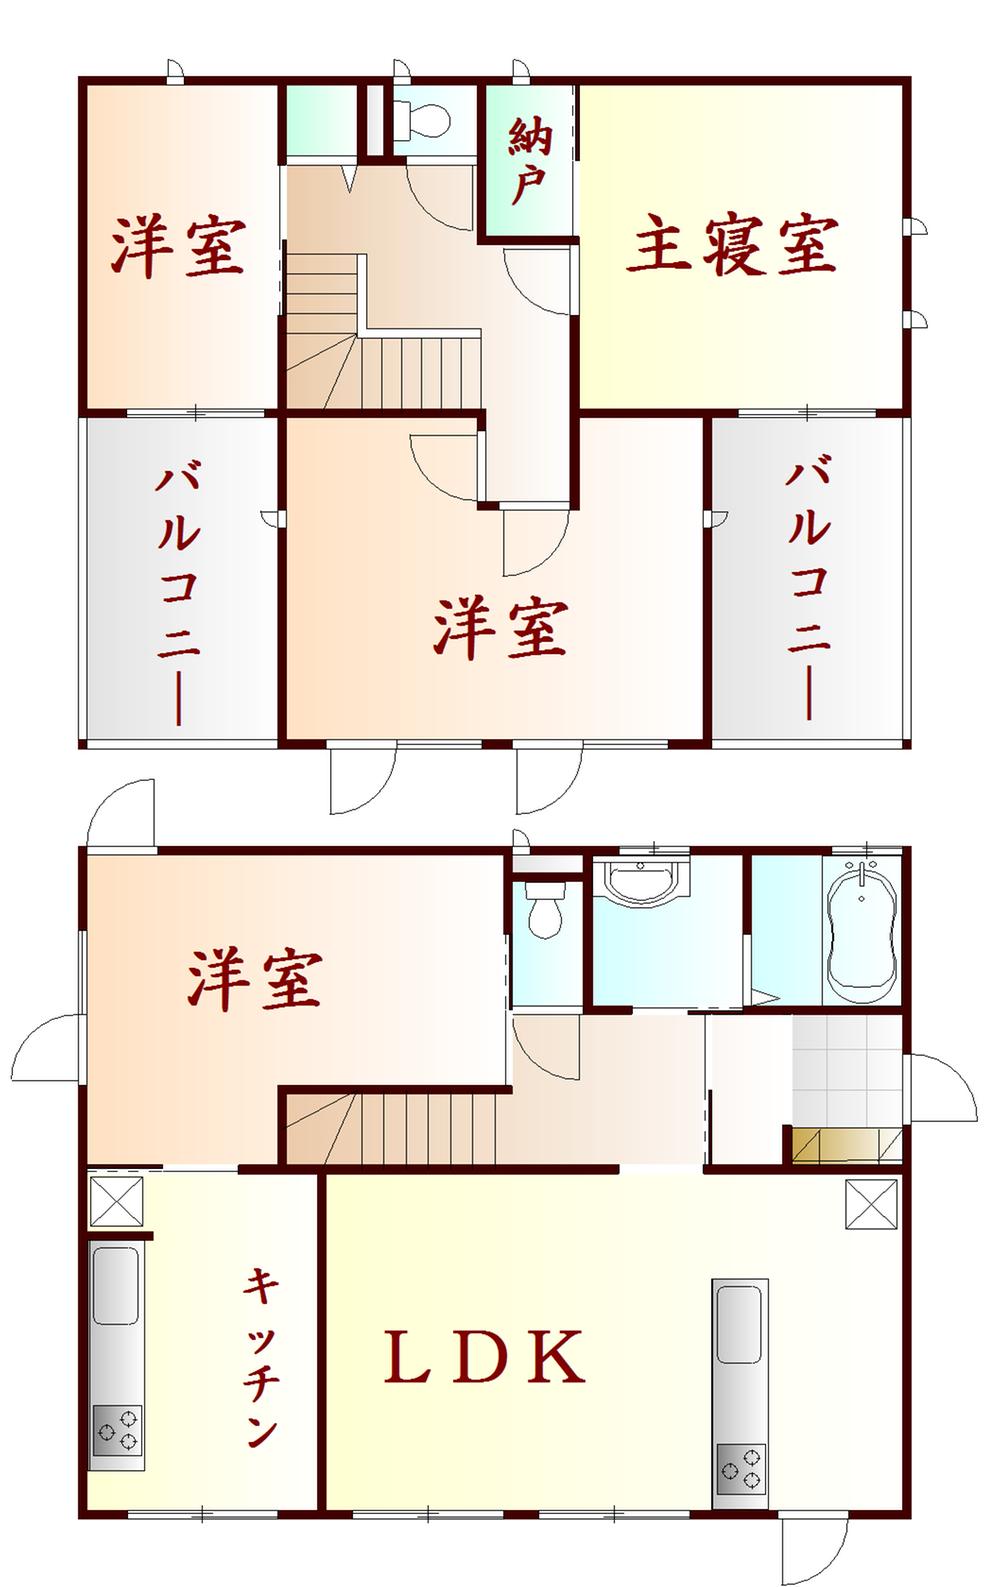 Floor plan. 30 million yen, 4LDKK + S (storeroom), Land area 219.19 sq m , Building area 128.65 sq m